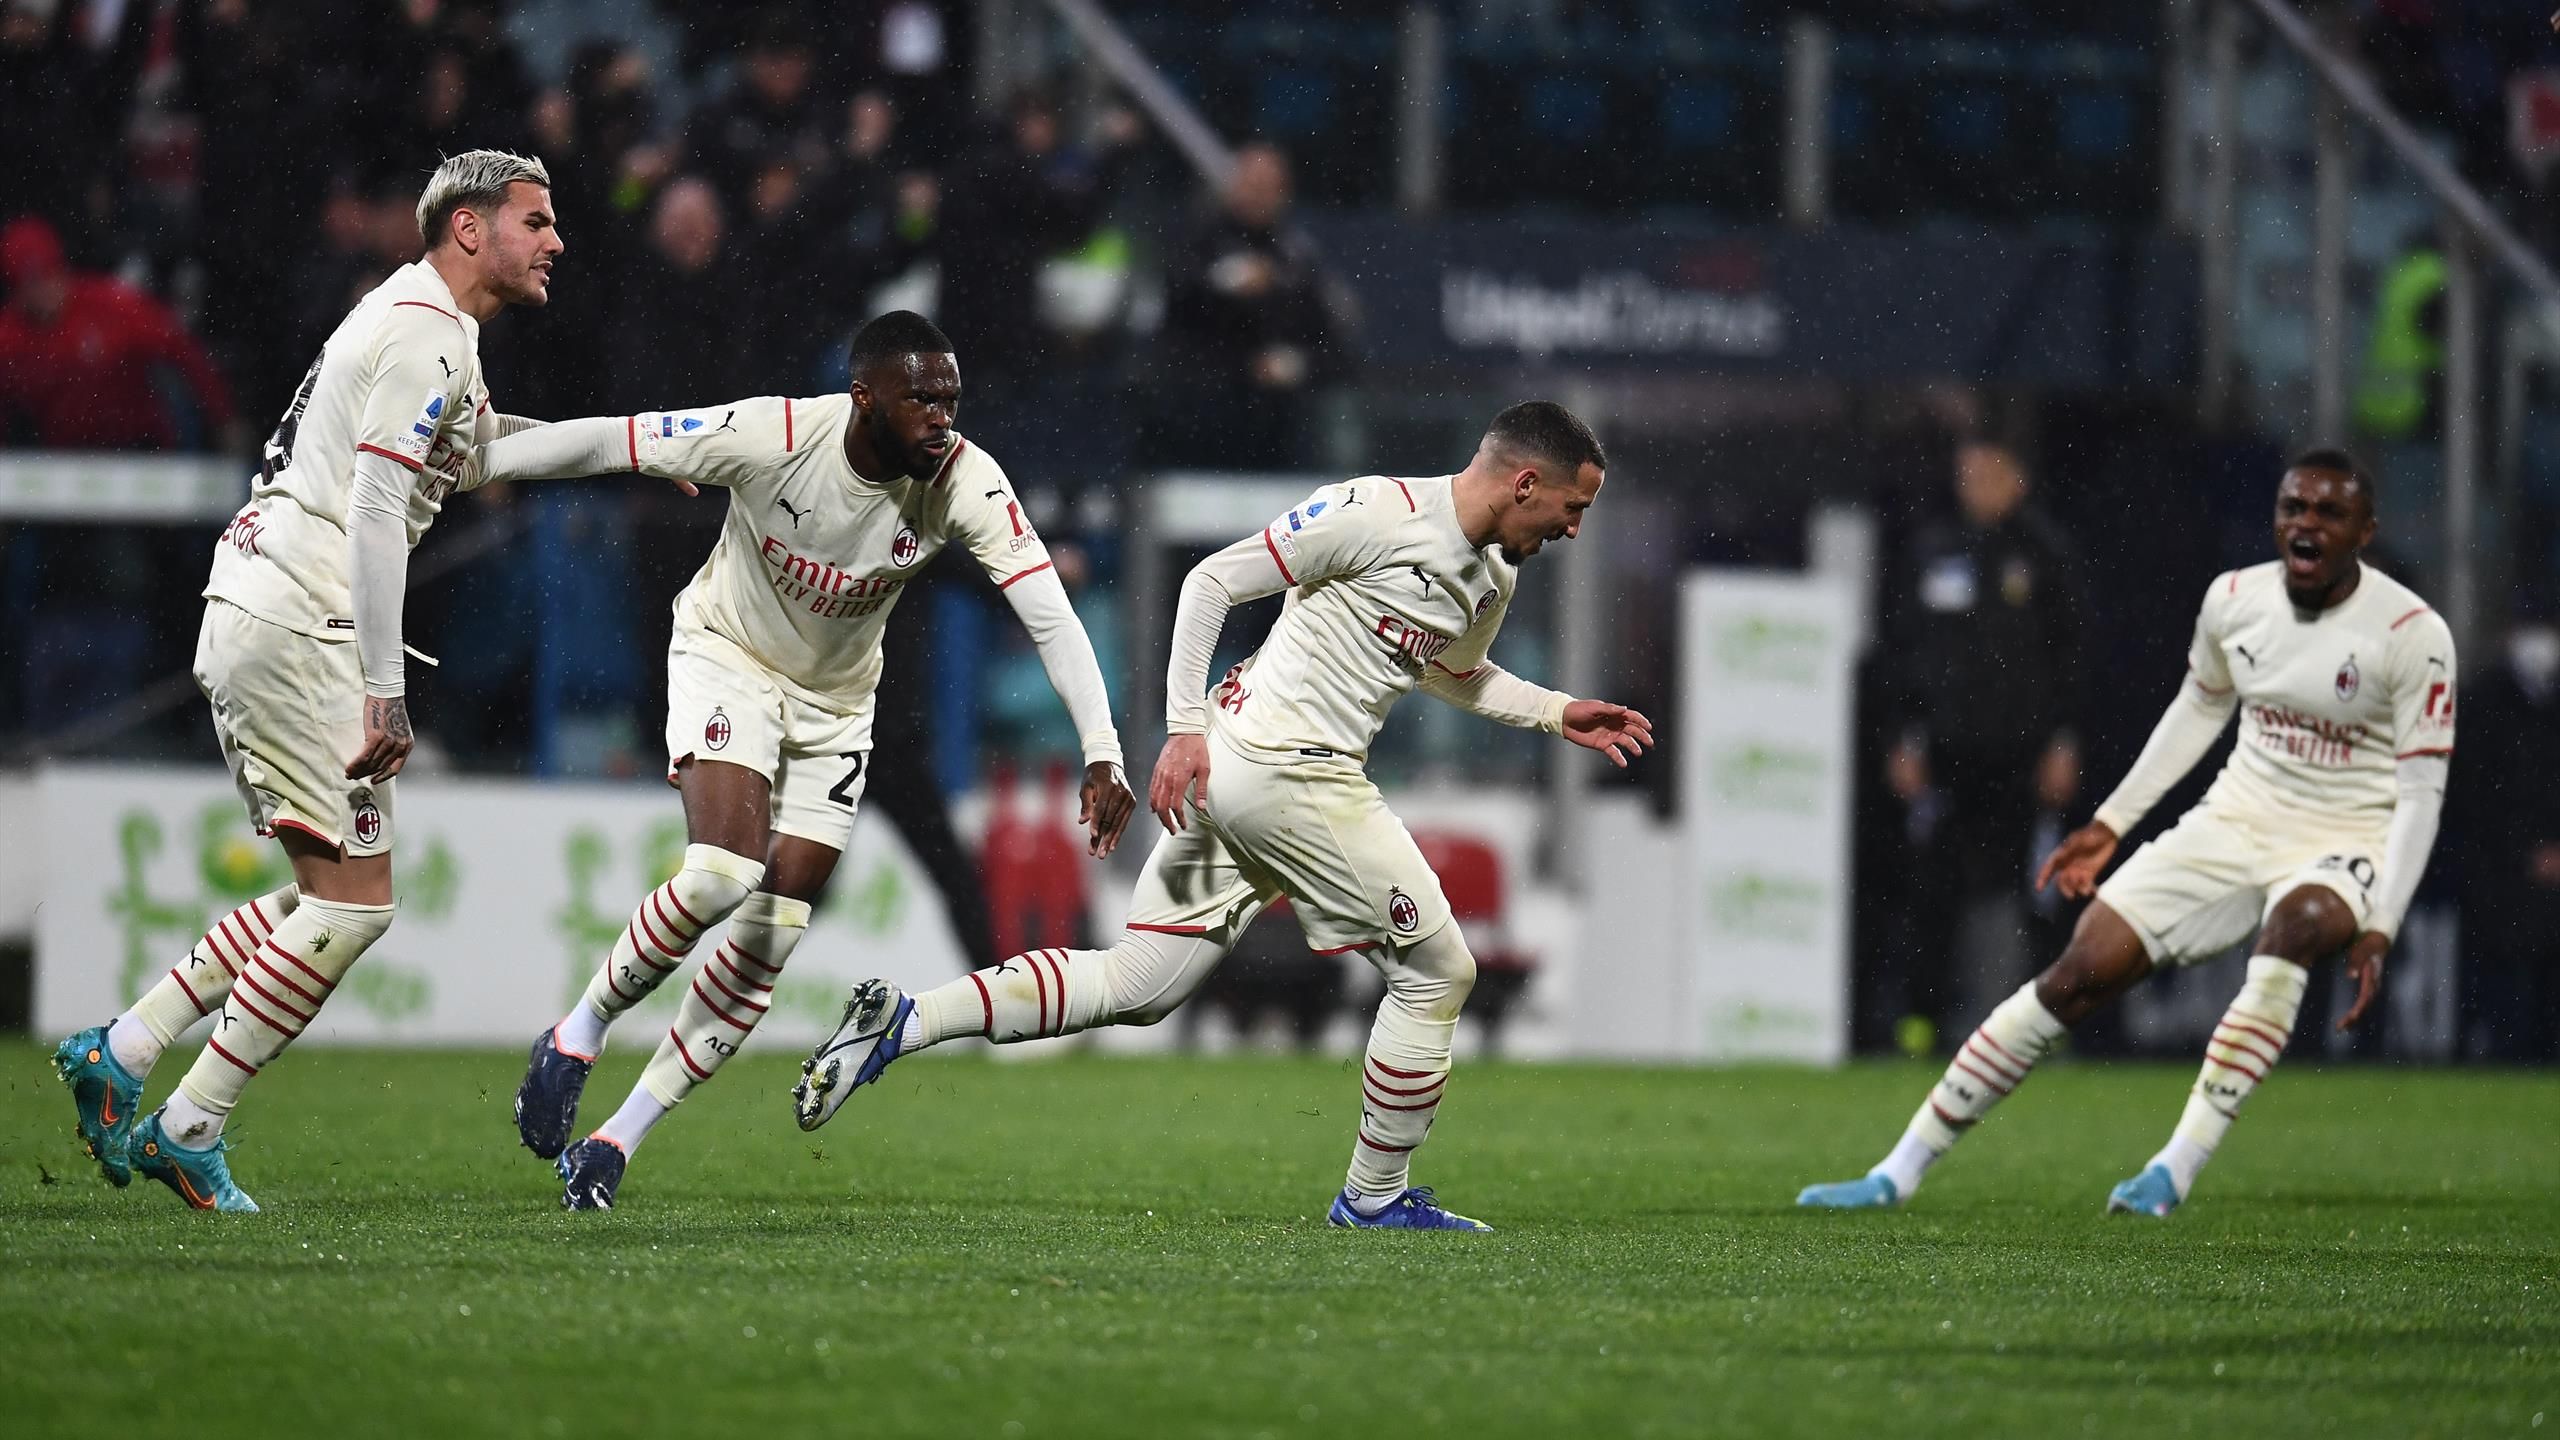 Serie A - Ismael Bennacer scores winner as AC Milan edge out Cagliari - Eurosport